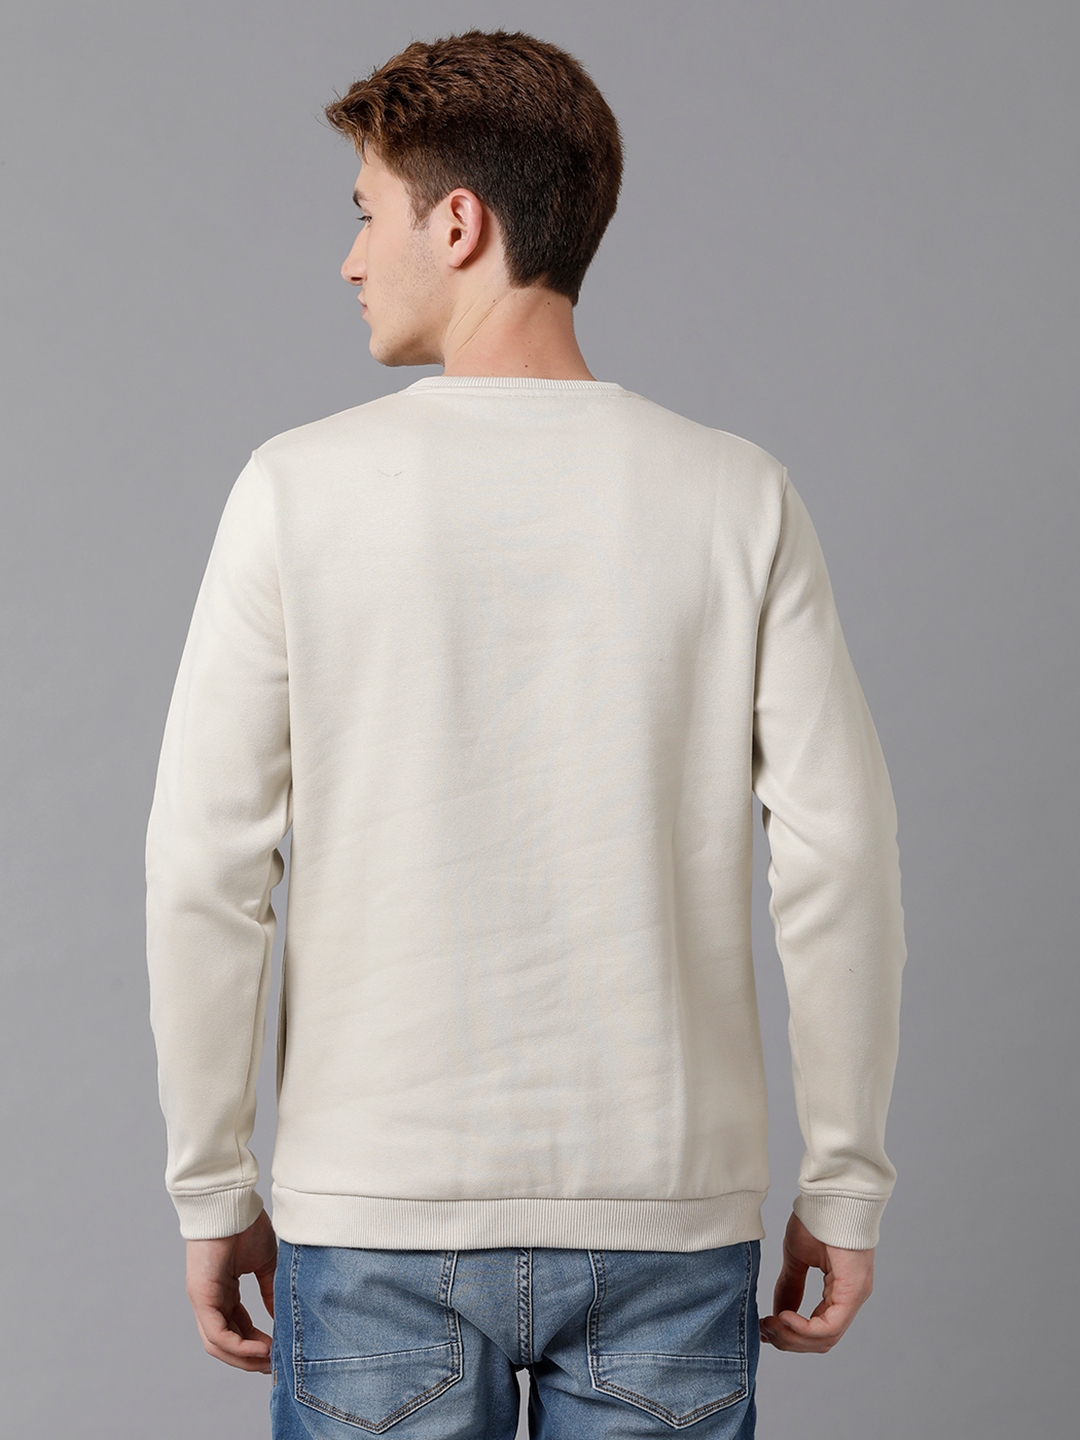 Men's Off White Cotton Blend Solid Sweatshirts